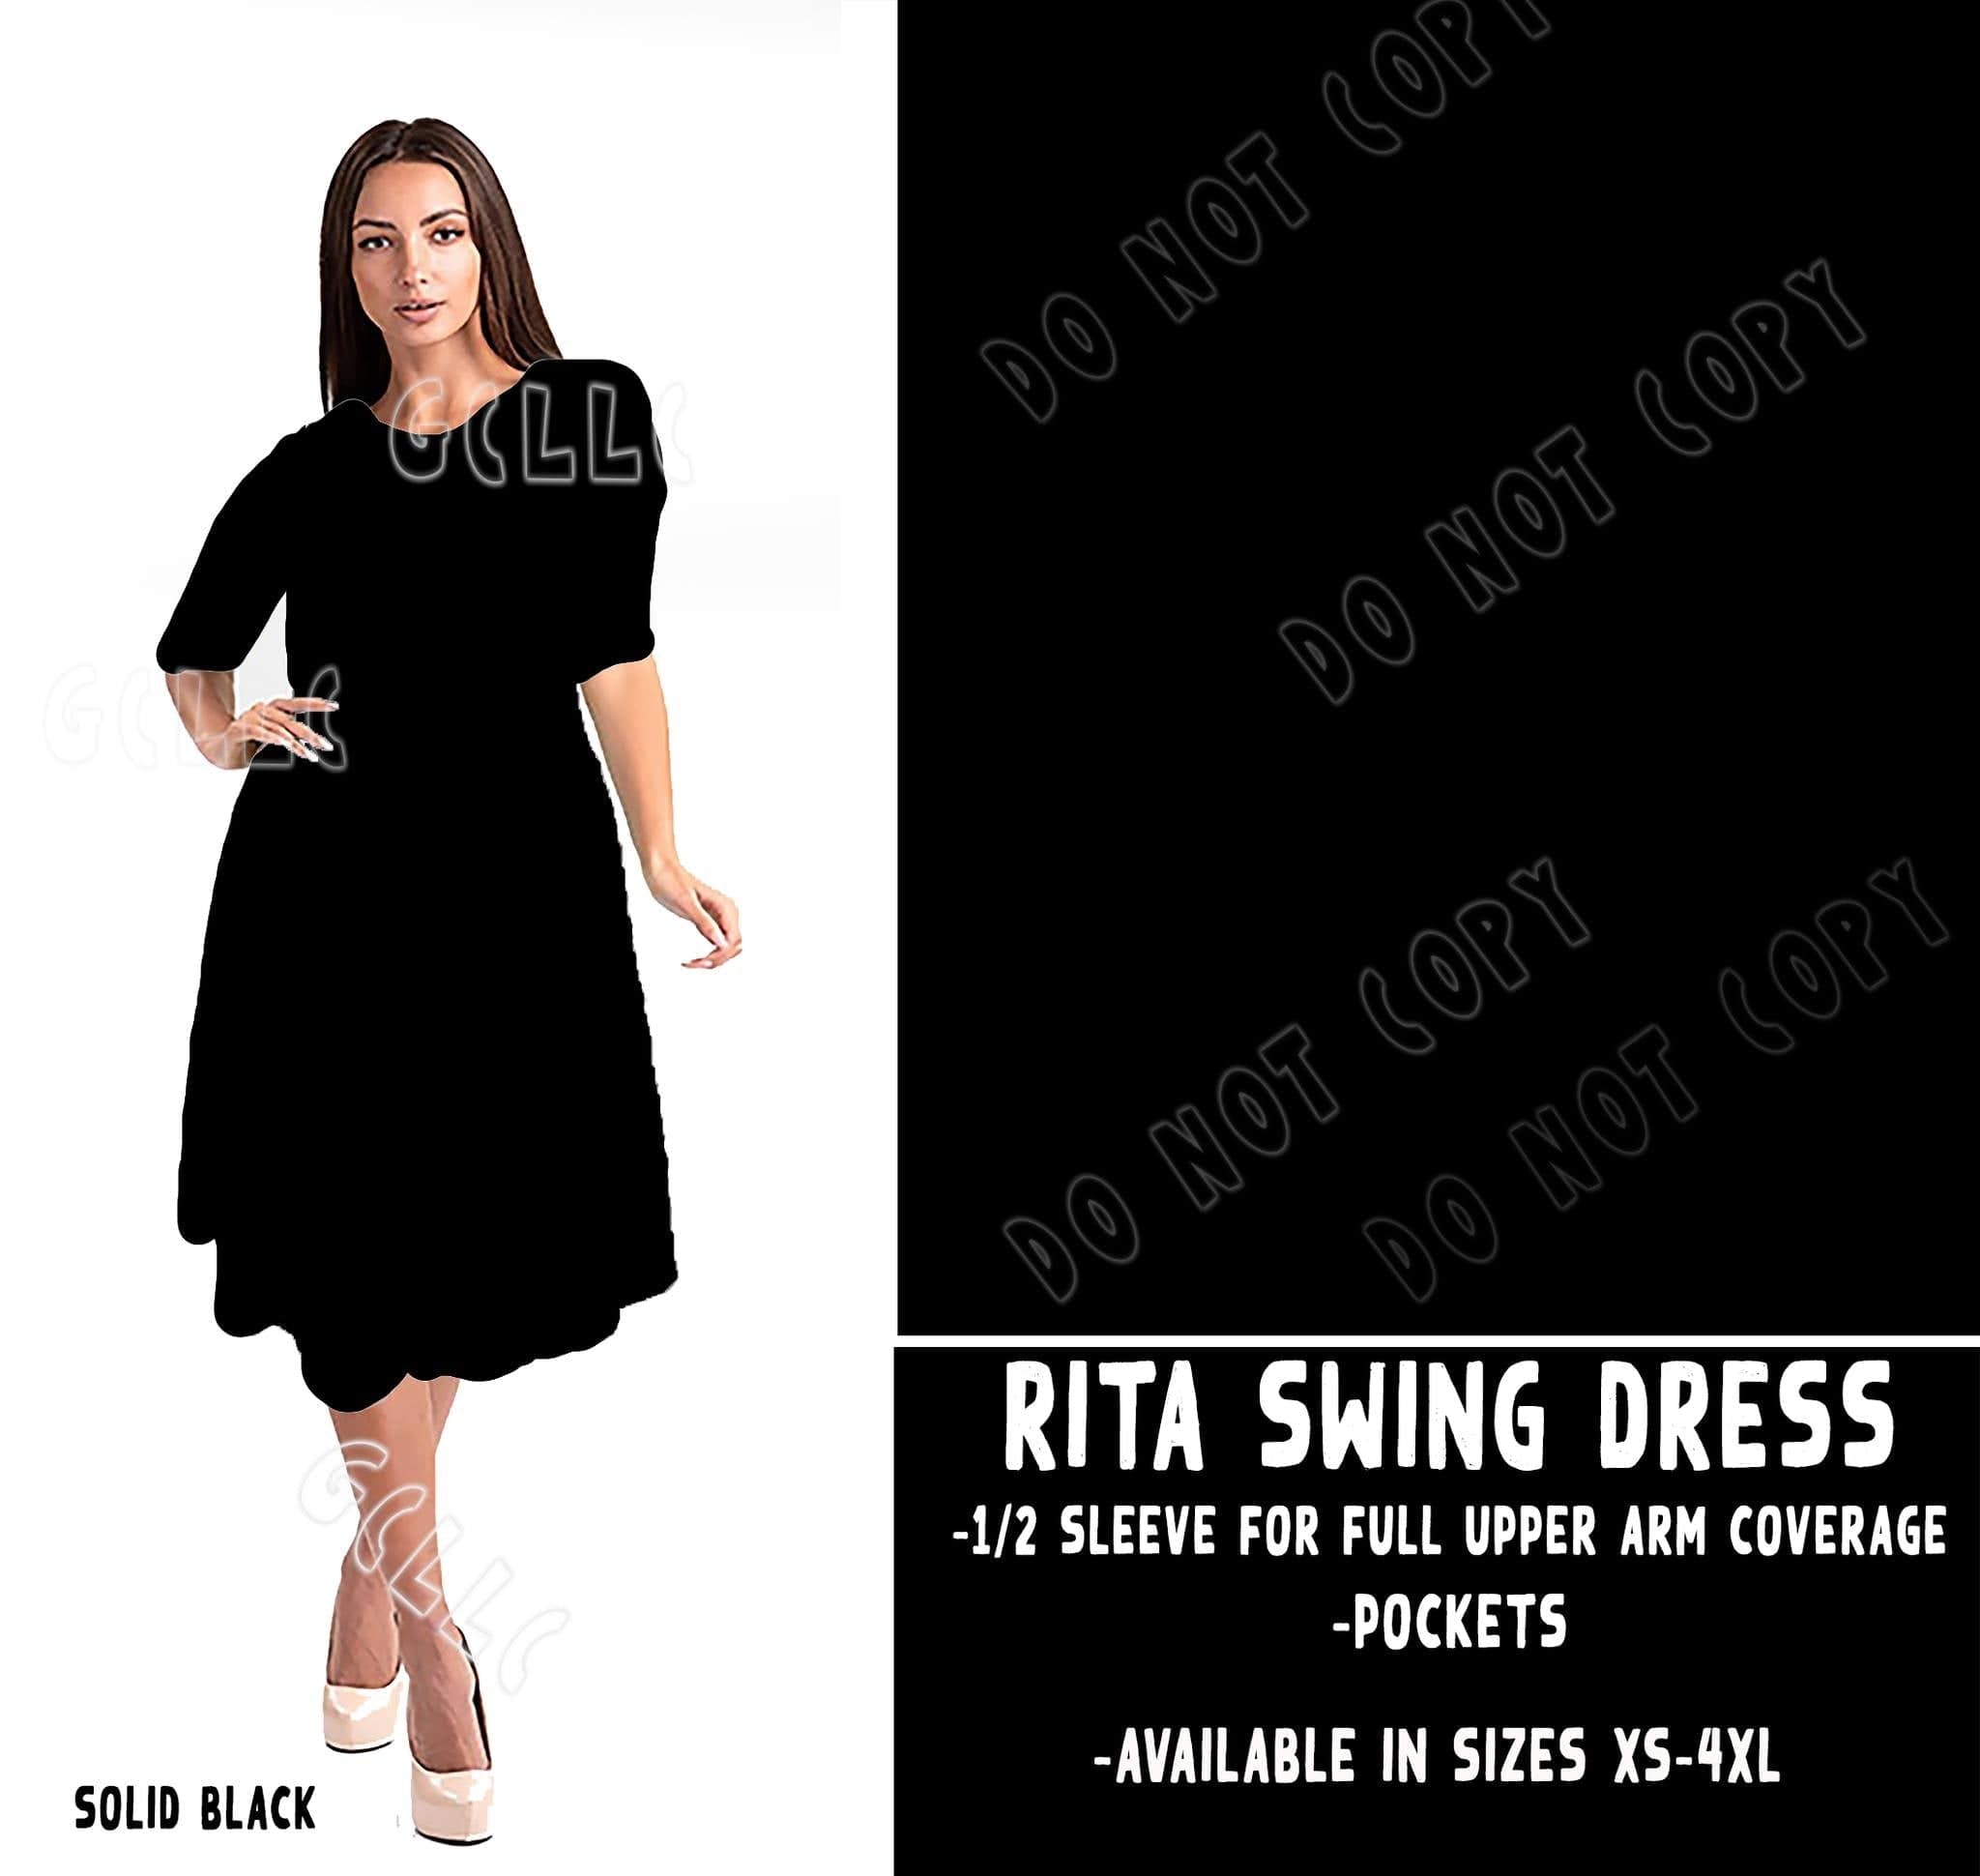 RITA SWING DRESS RUN-SOLID BLACK-Stay Foxy Boutique, Florissant, Missouri